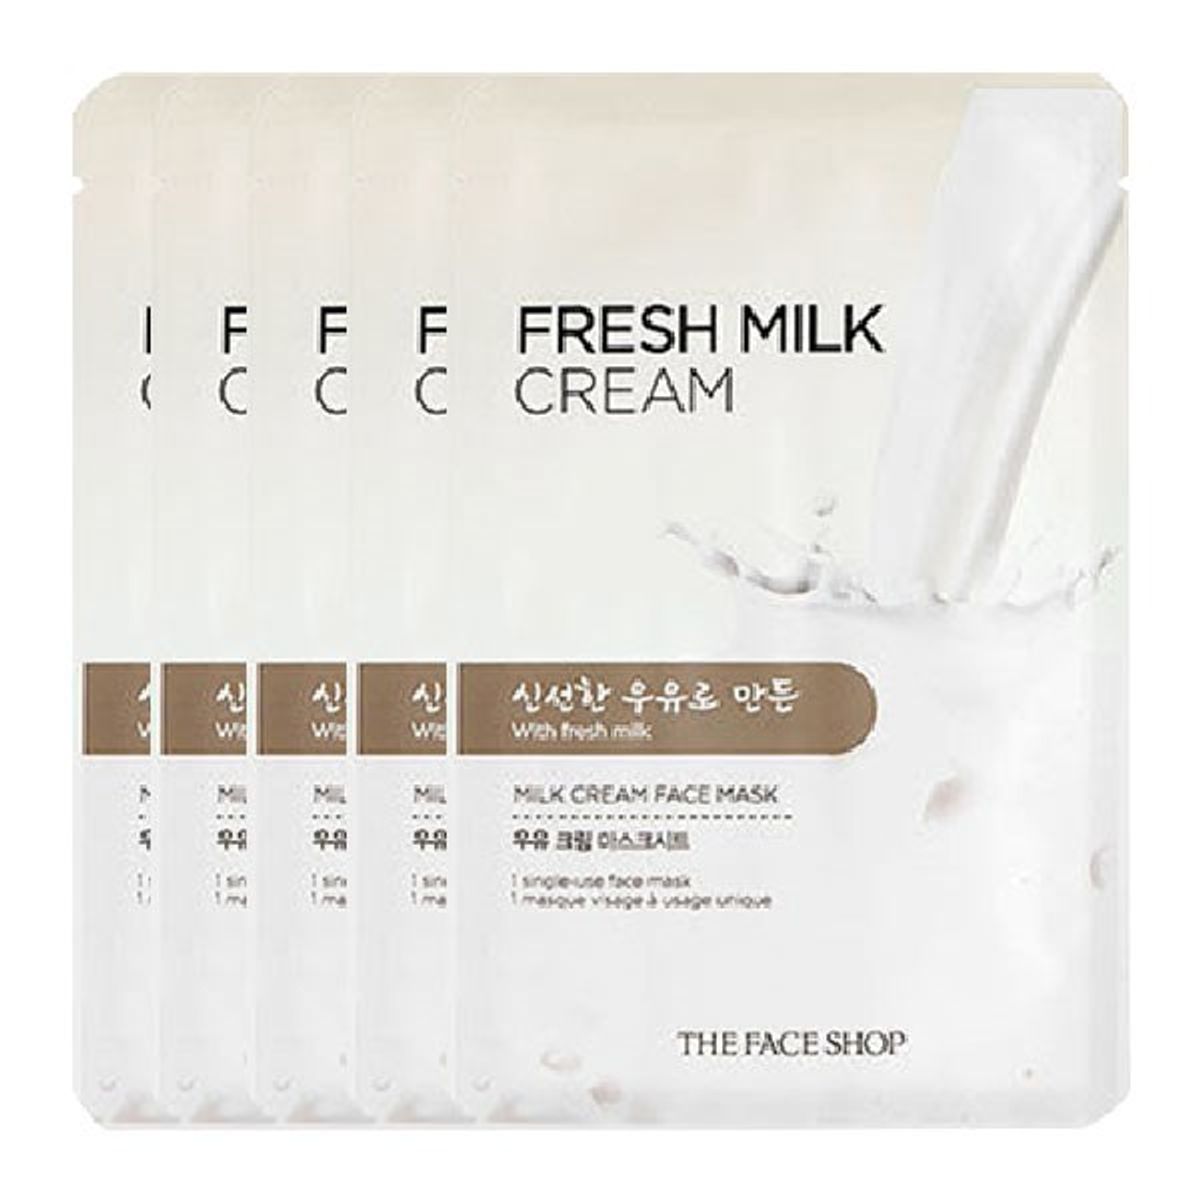 mat-na-cung-cap-am-milk-cream-face-mask-2-1